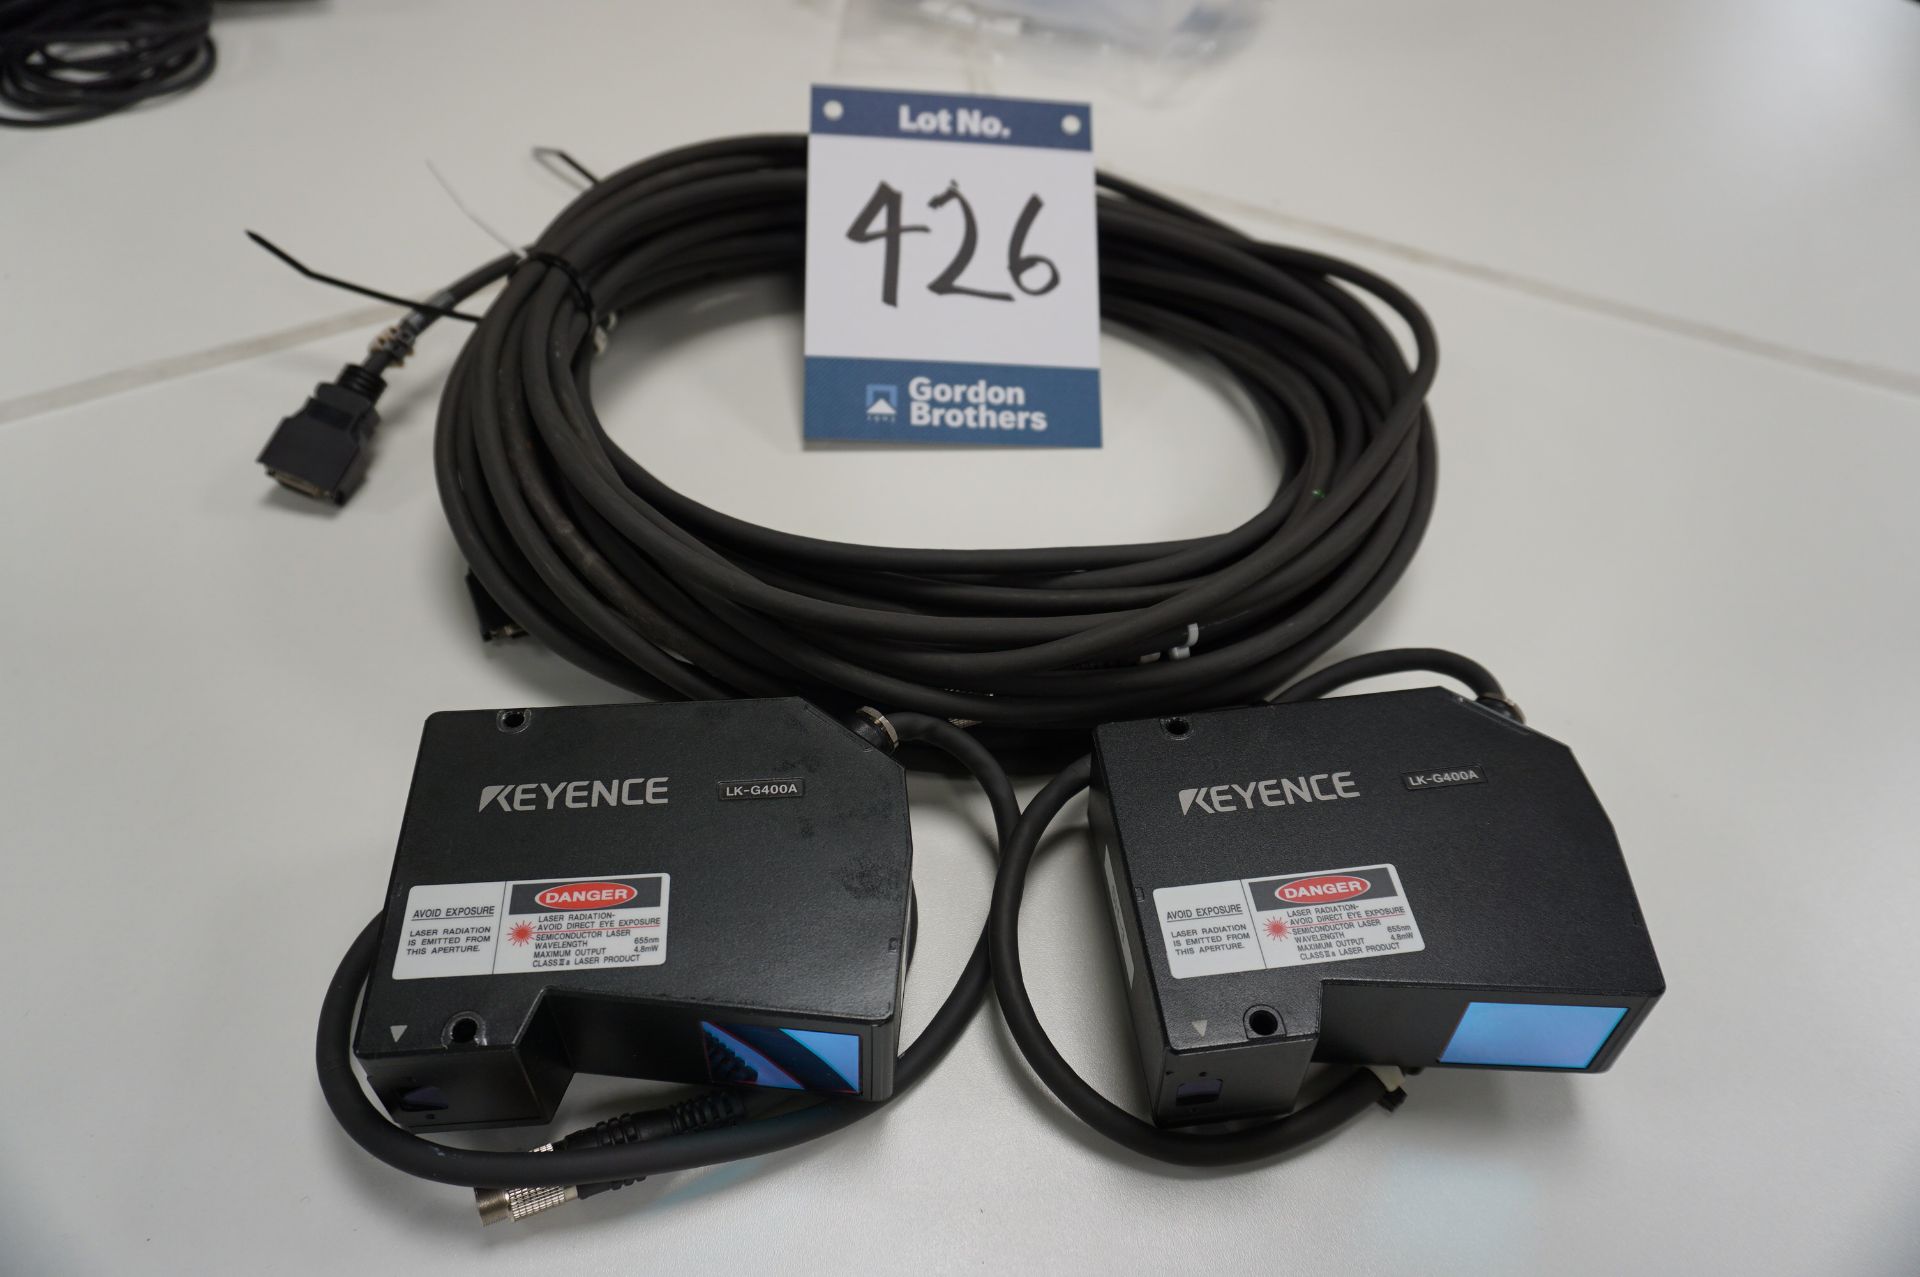 2 x Keyence LK-G400A laser sensors